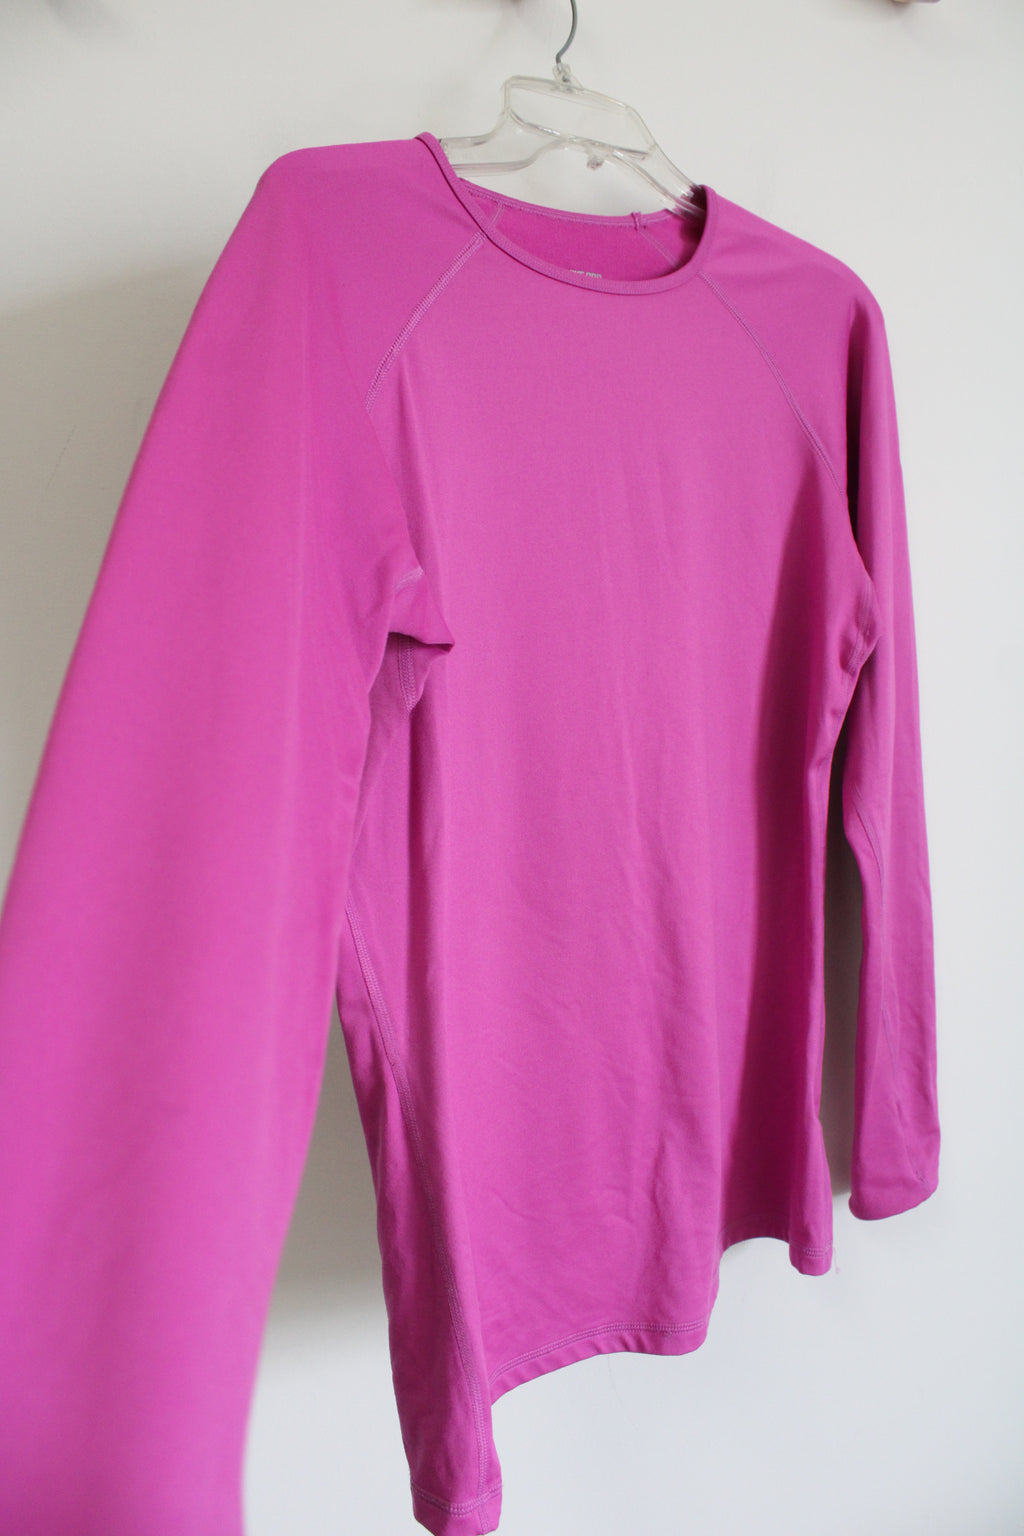 Nike Pro Pink Fleece Lined Long Sleeved Shirt | L